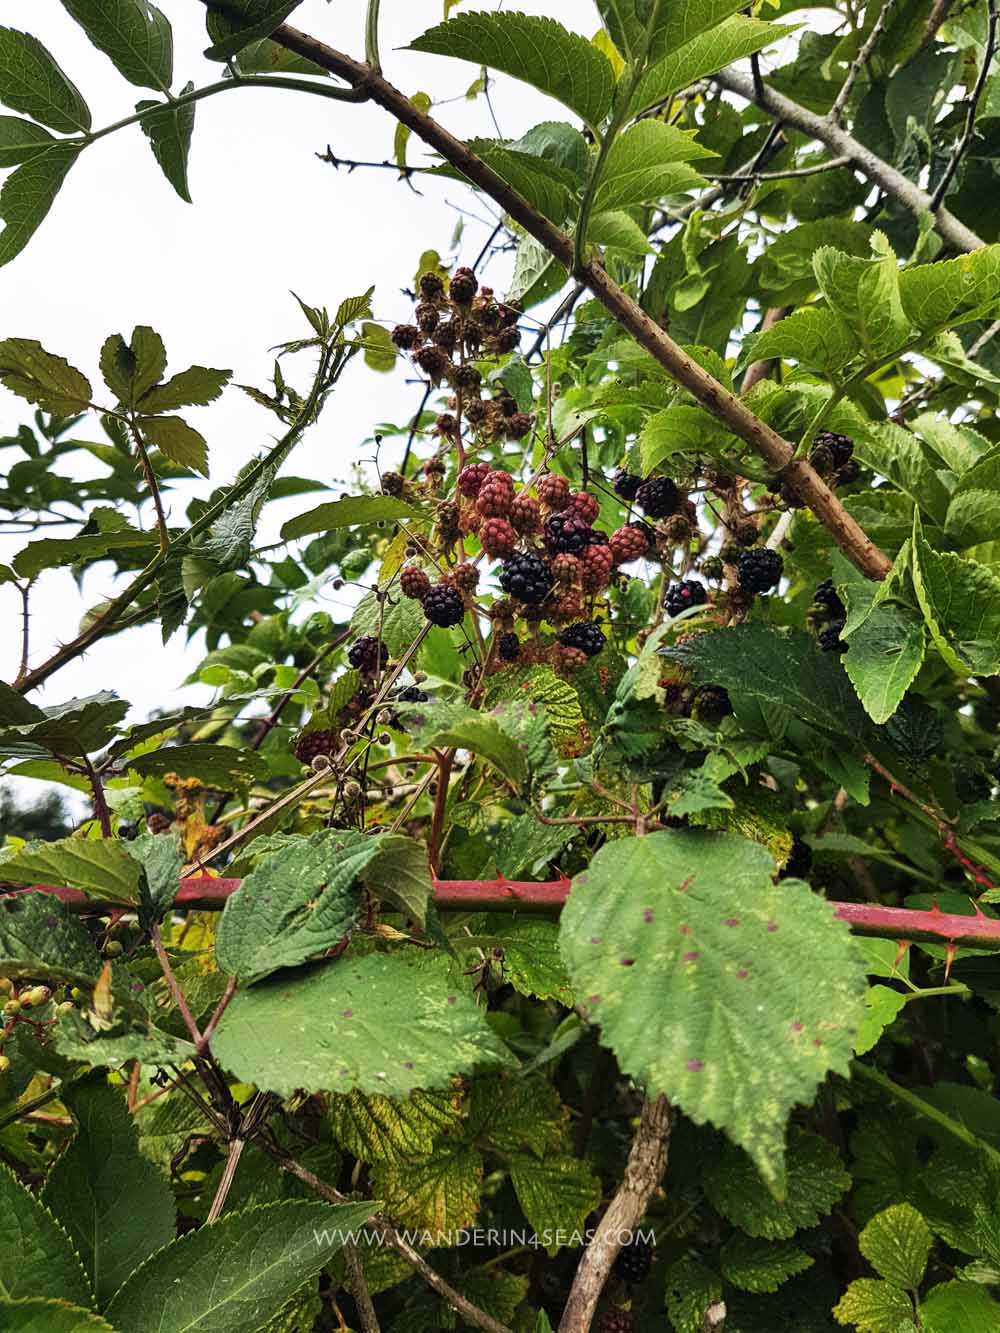 Sumptuous black berries